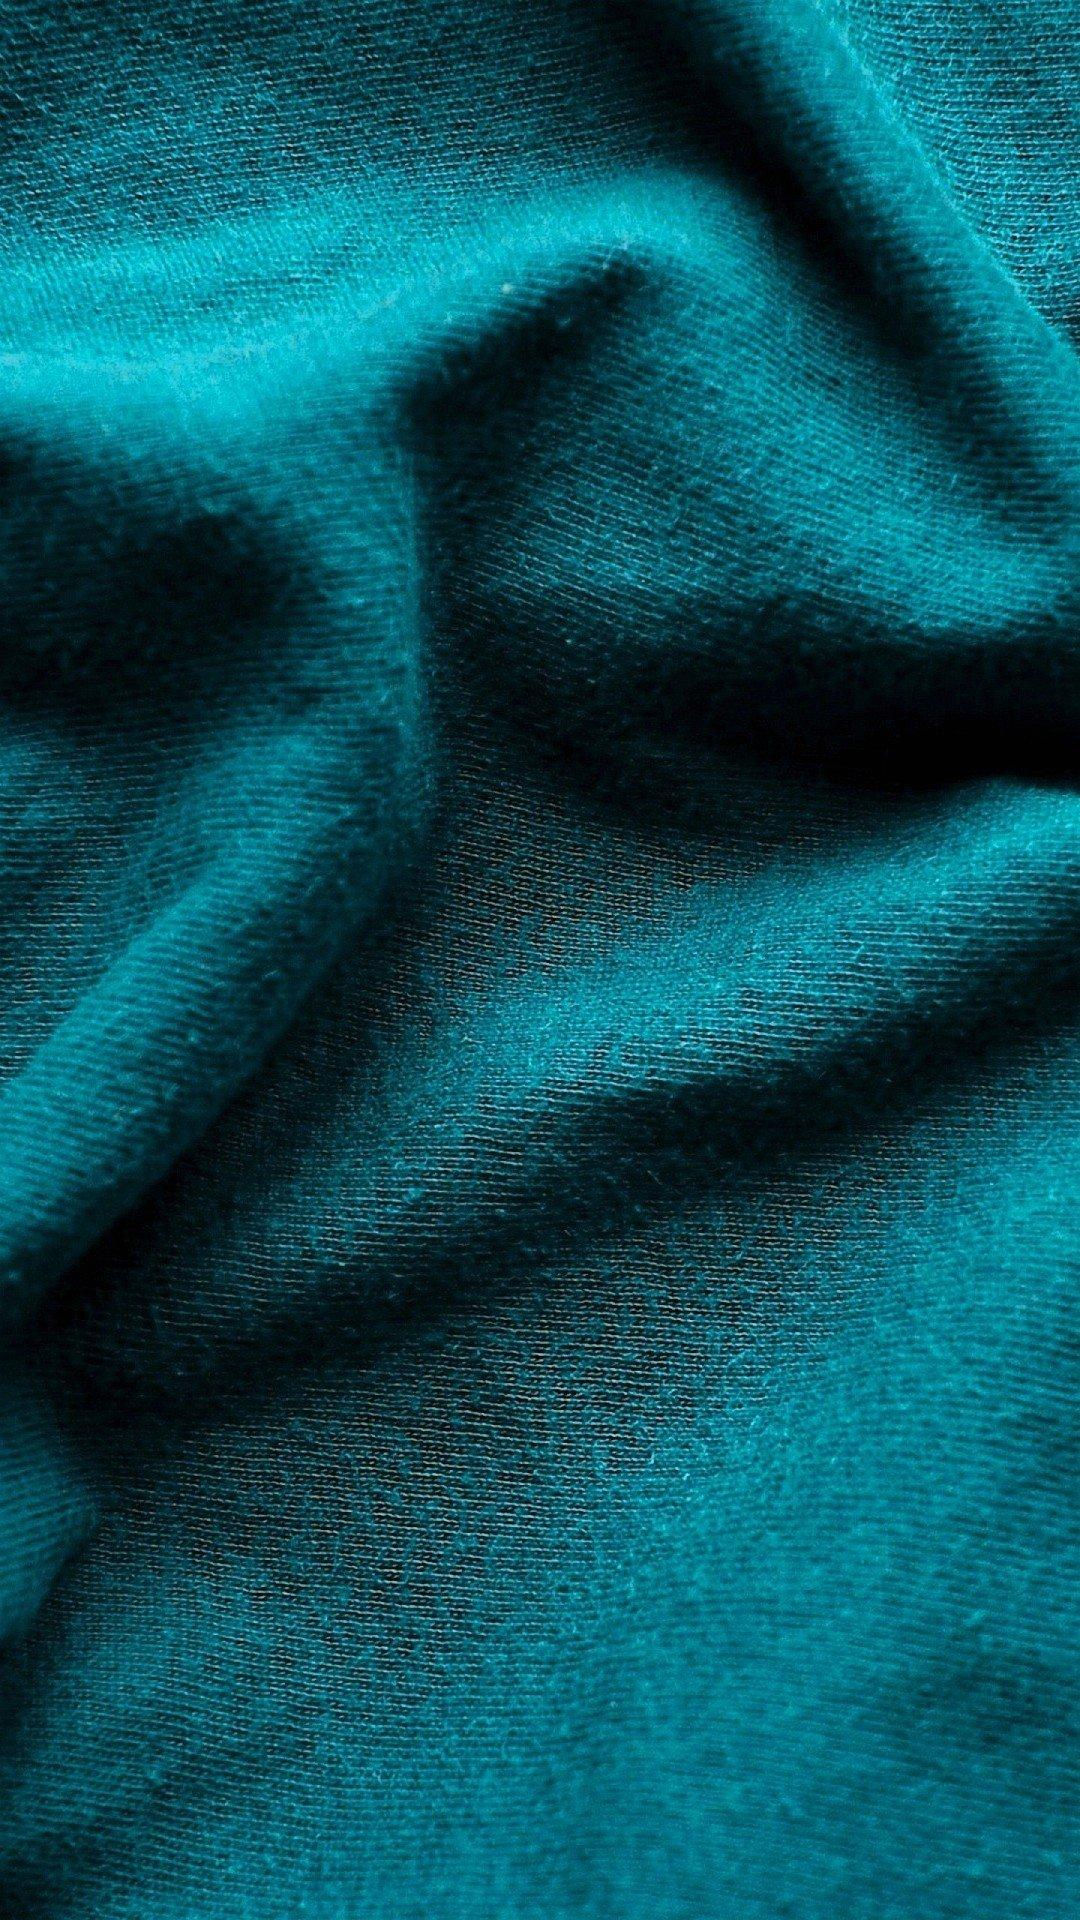 Blue cloth